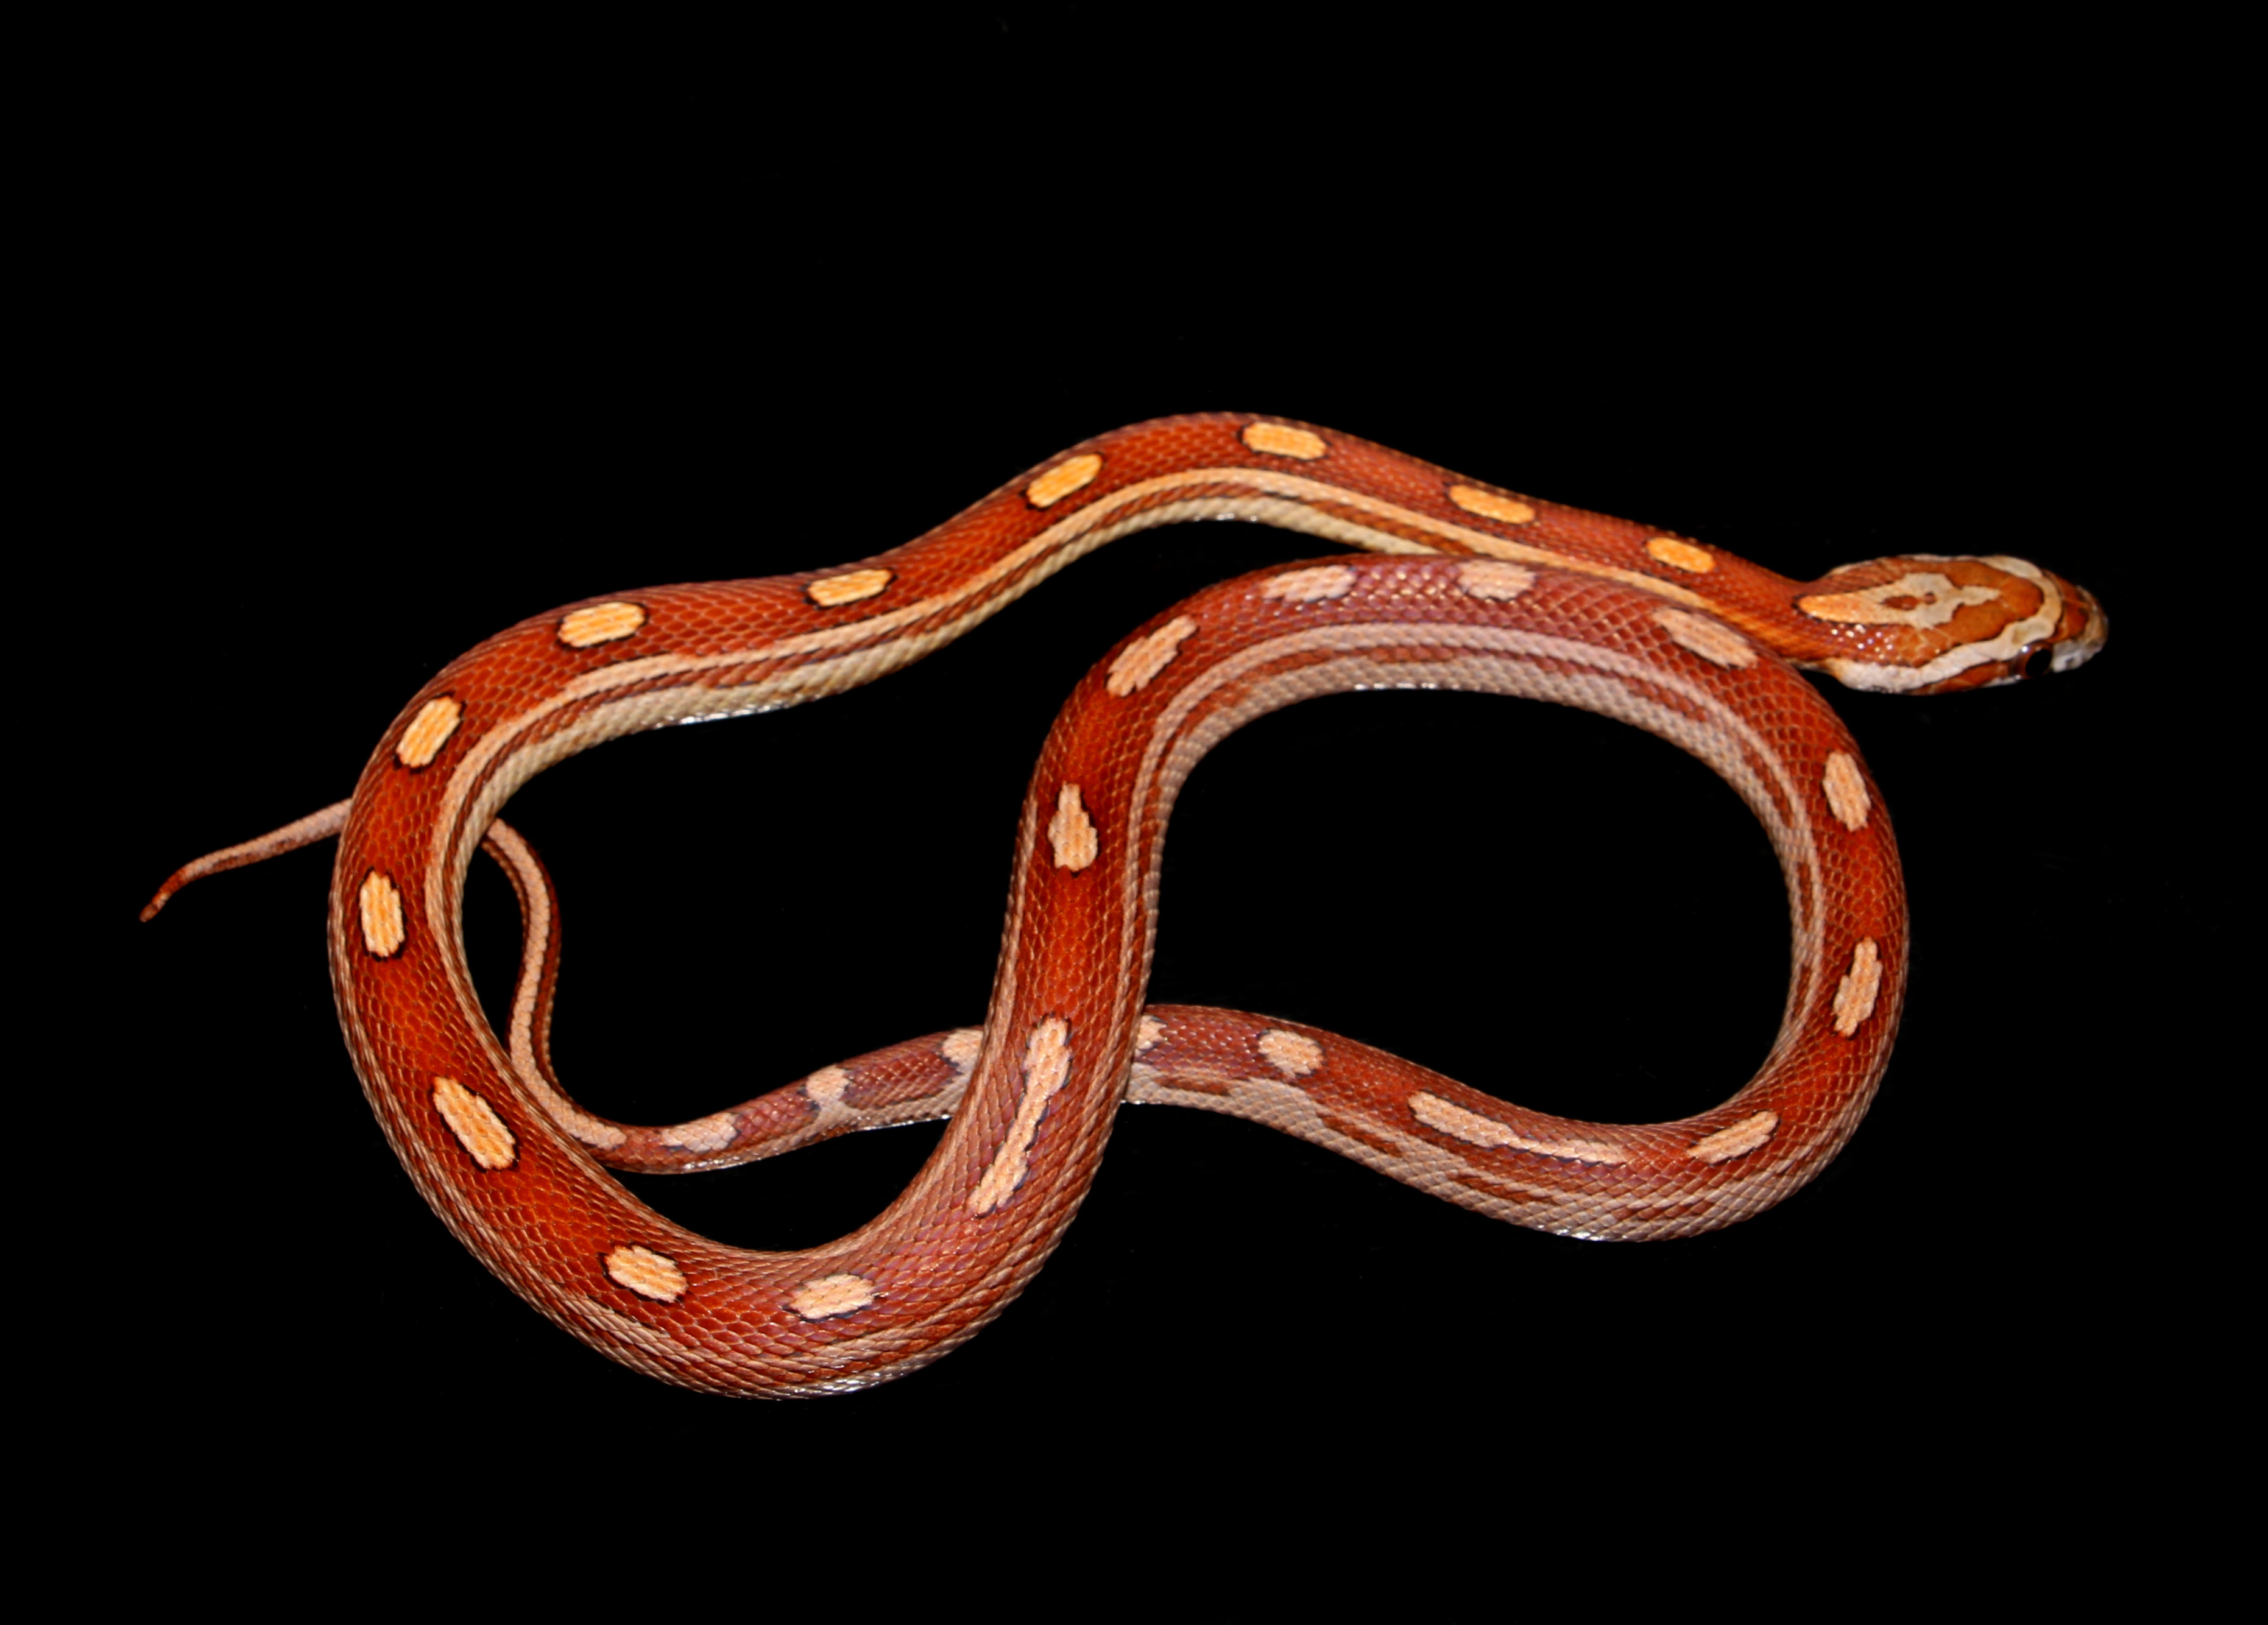 Motley Corn Snake by Darling Geckos